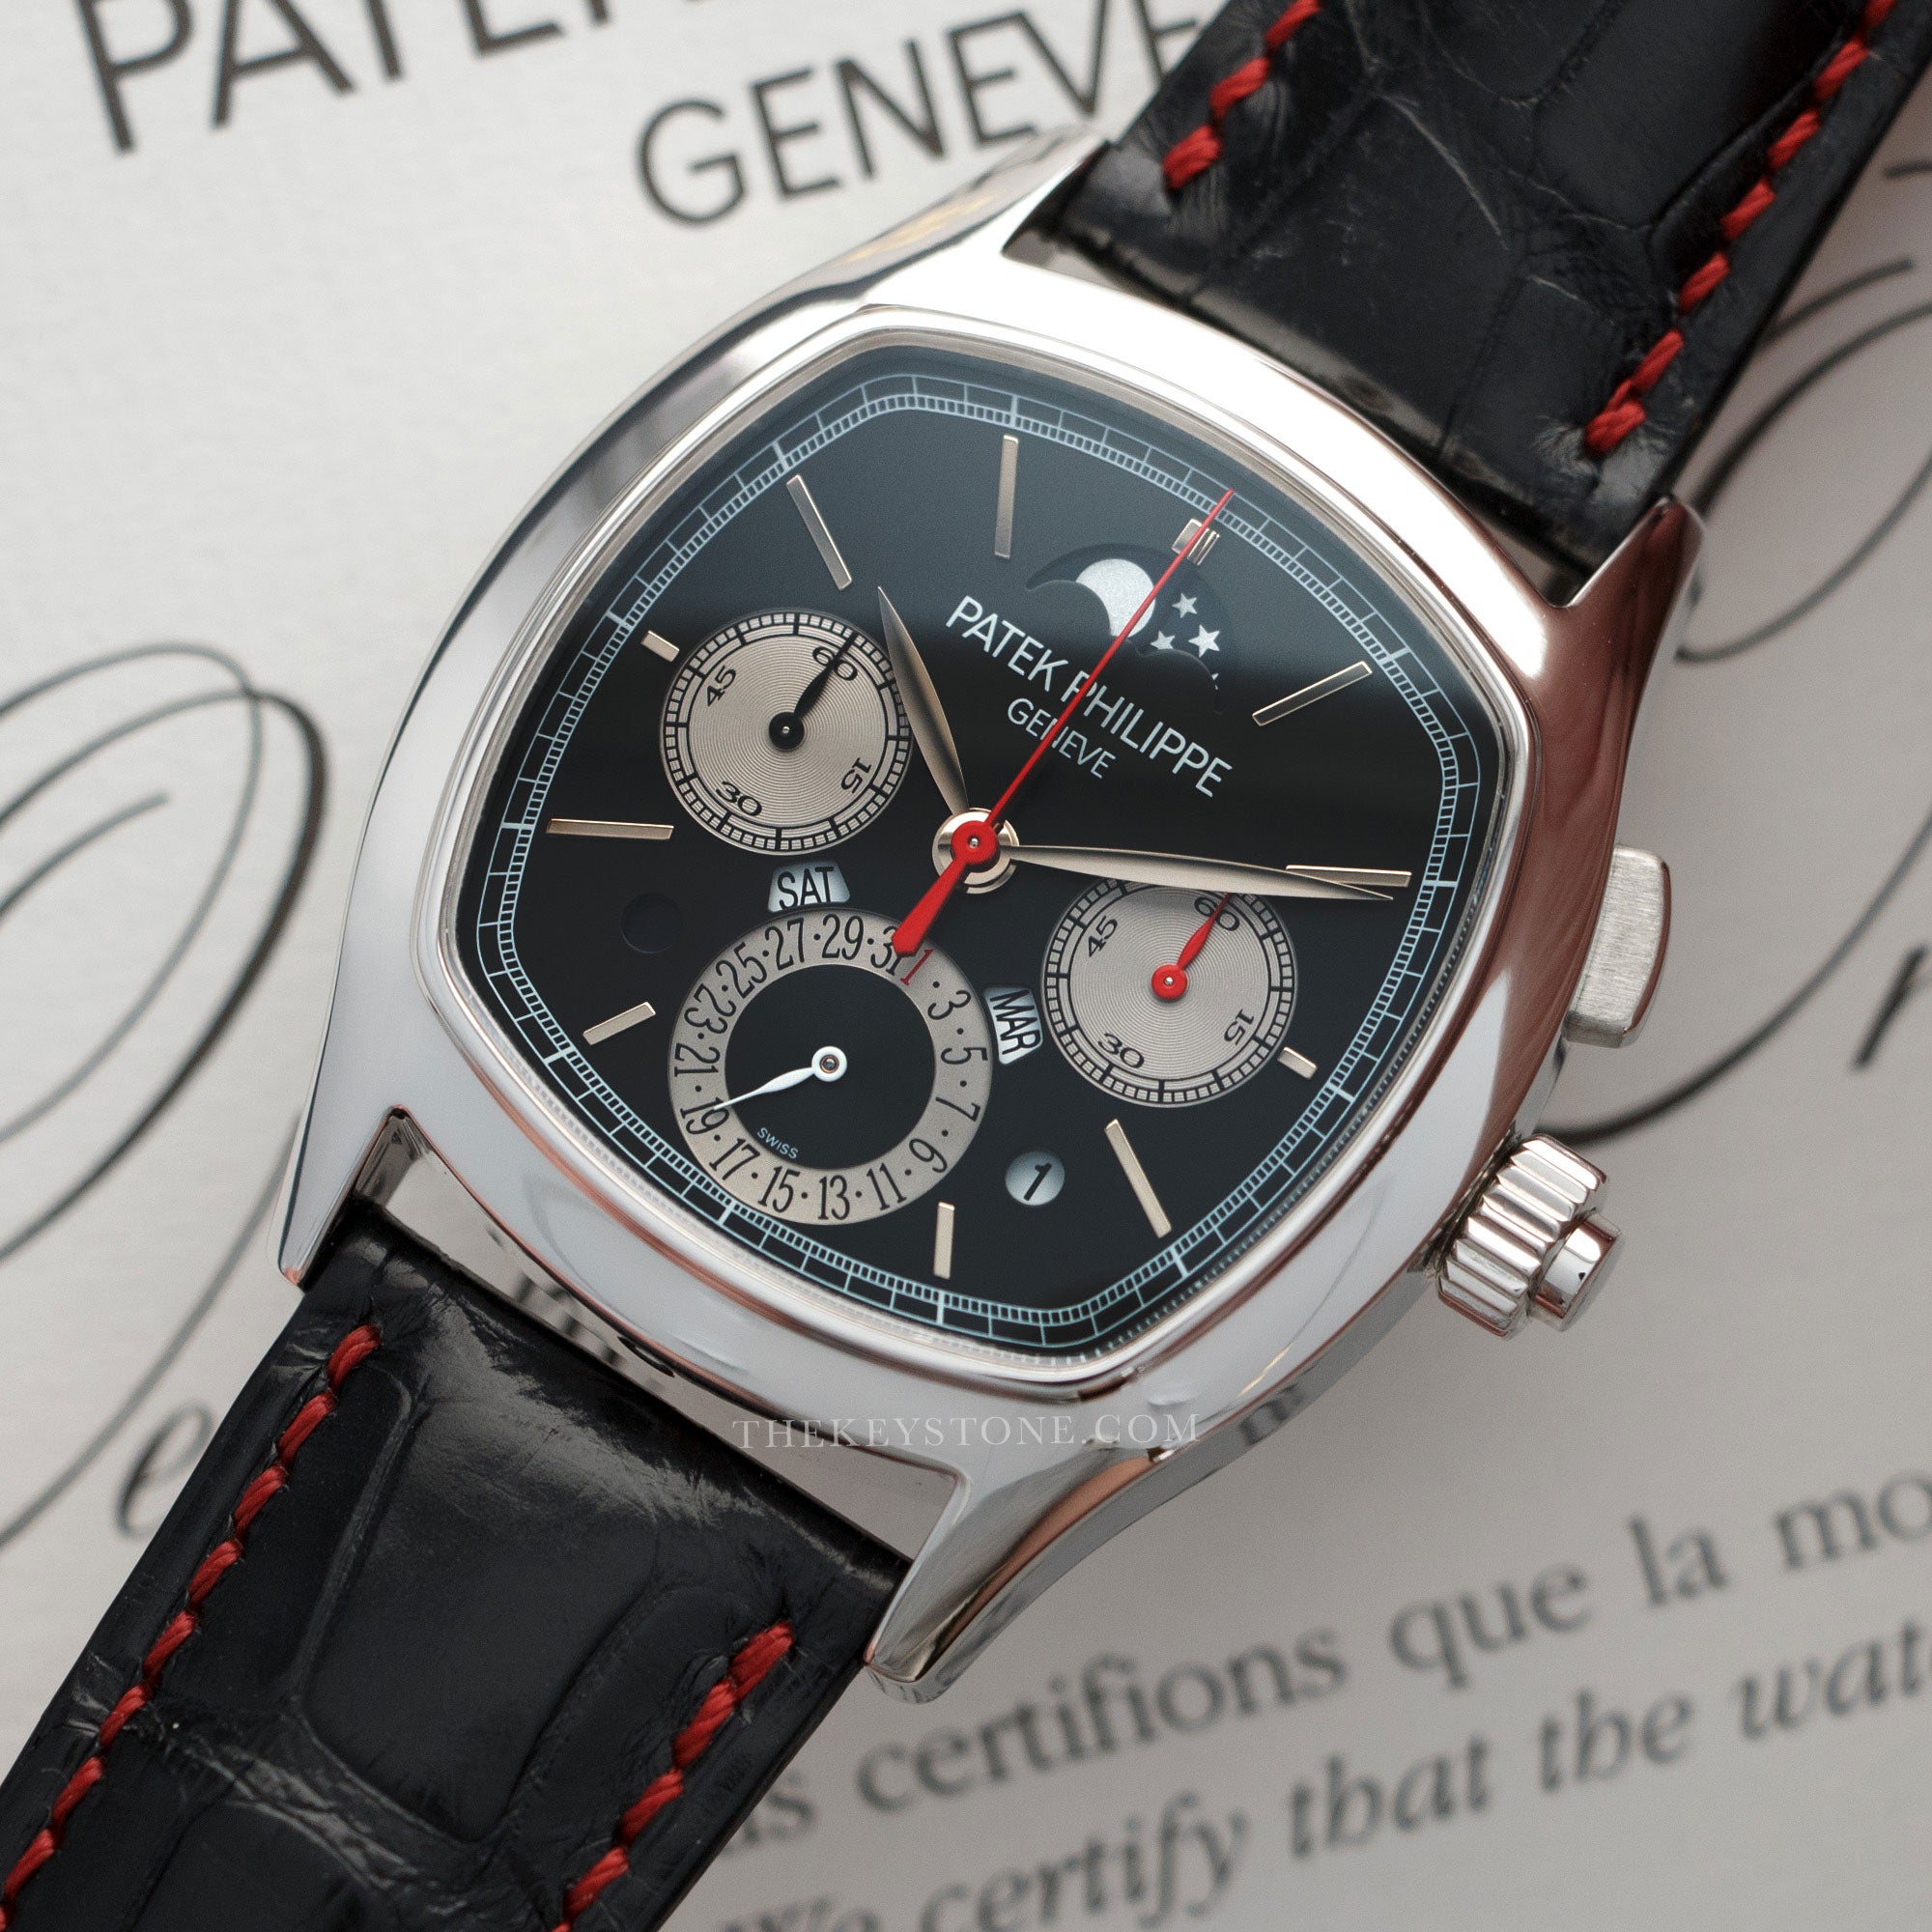 Patek Philippe - Patek Philippe Platinum Split Seconds Perpetual Monopoissor Chronograph Watch Ref. 5951 - The Keystone Watches